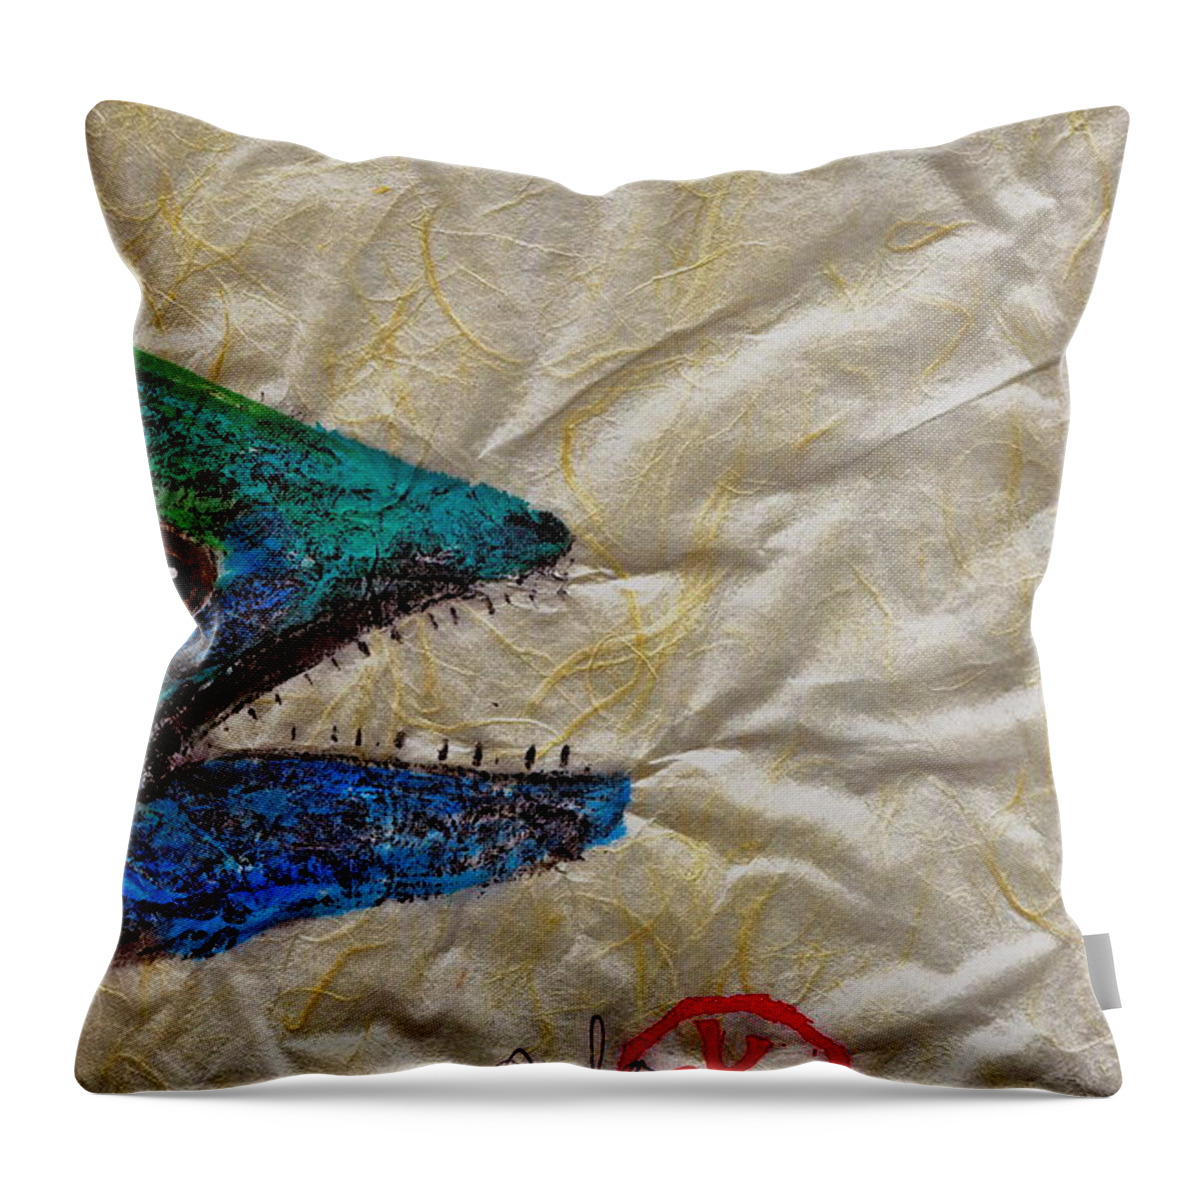 Spanish Mackerel Throw Pillow featuring the mixed media Gyotaku - Spanish Mackerel Head by Jeffrey Canha